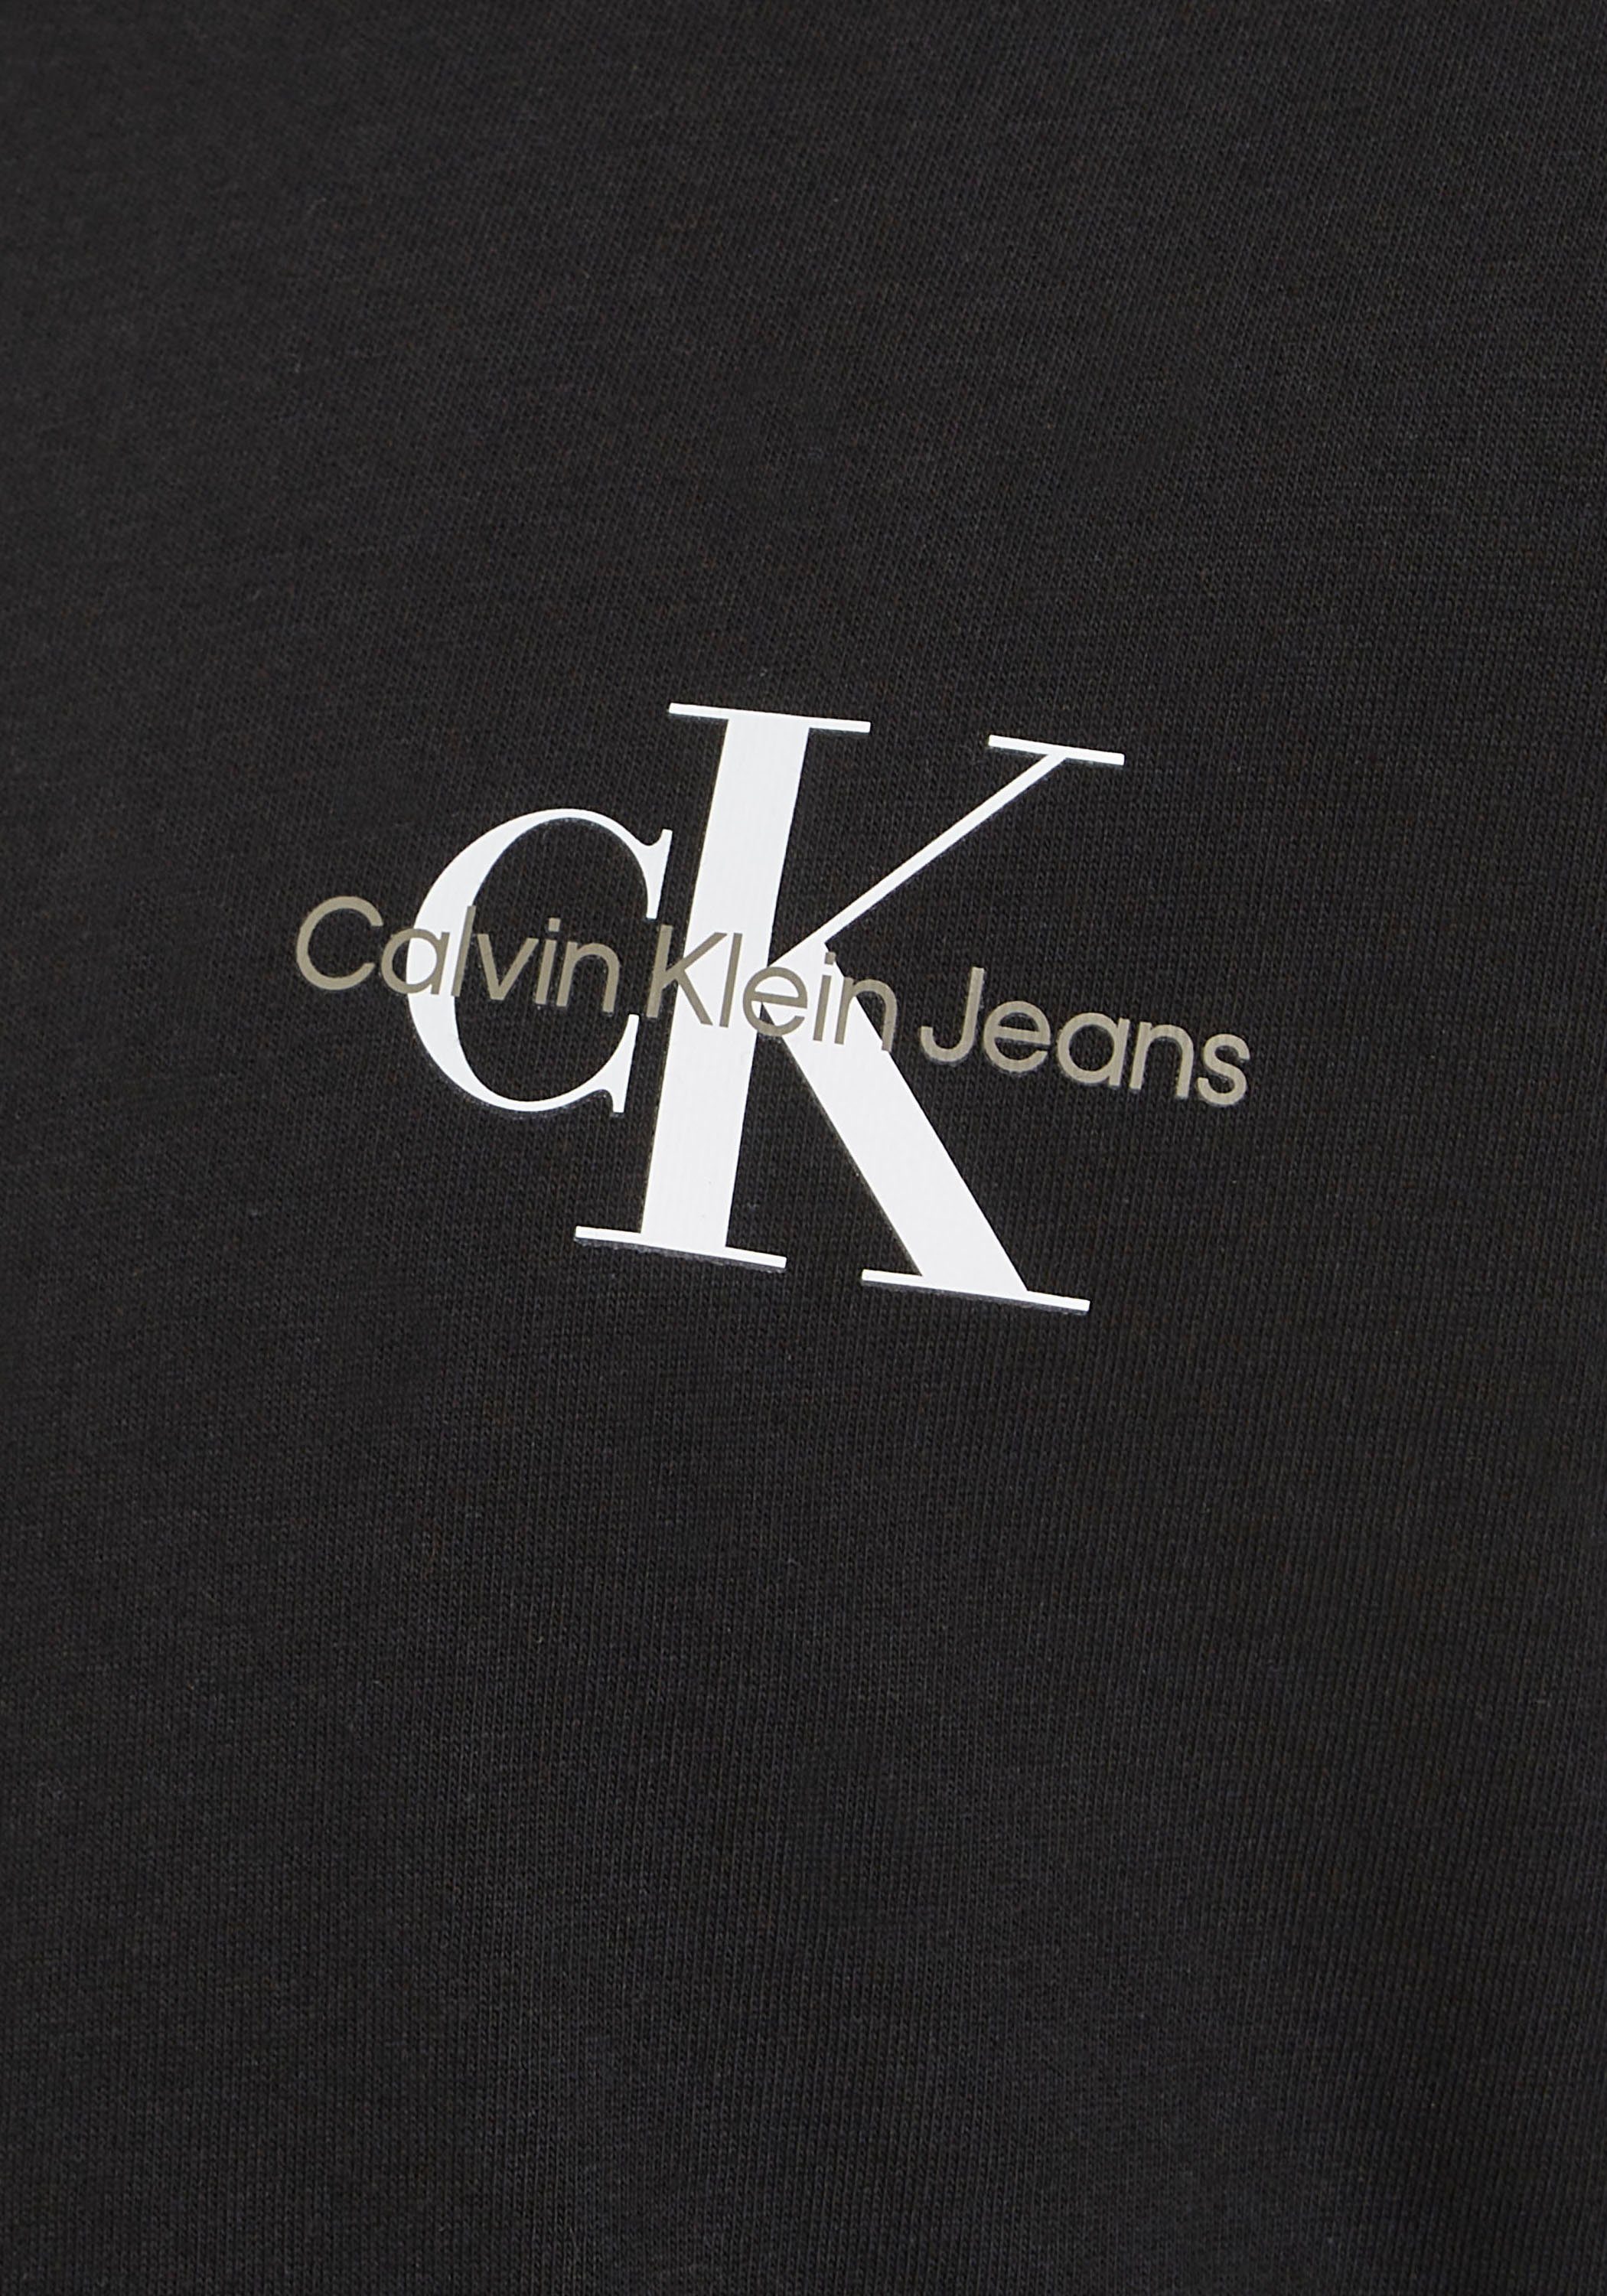 Klein TOP Black Calvin MONOGRAM Jeans Ck CHEST T-Shirt